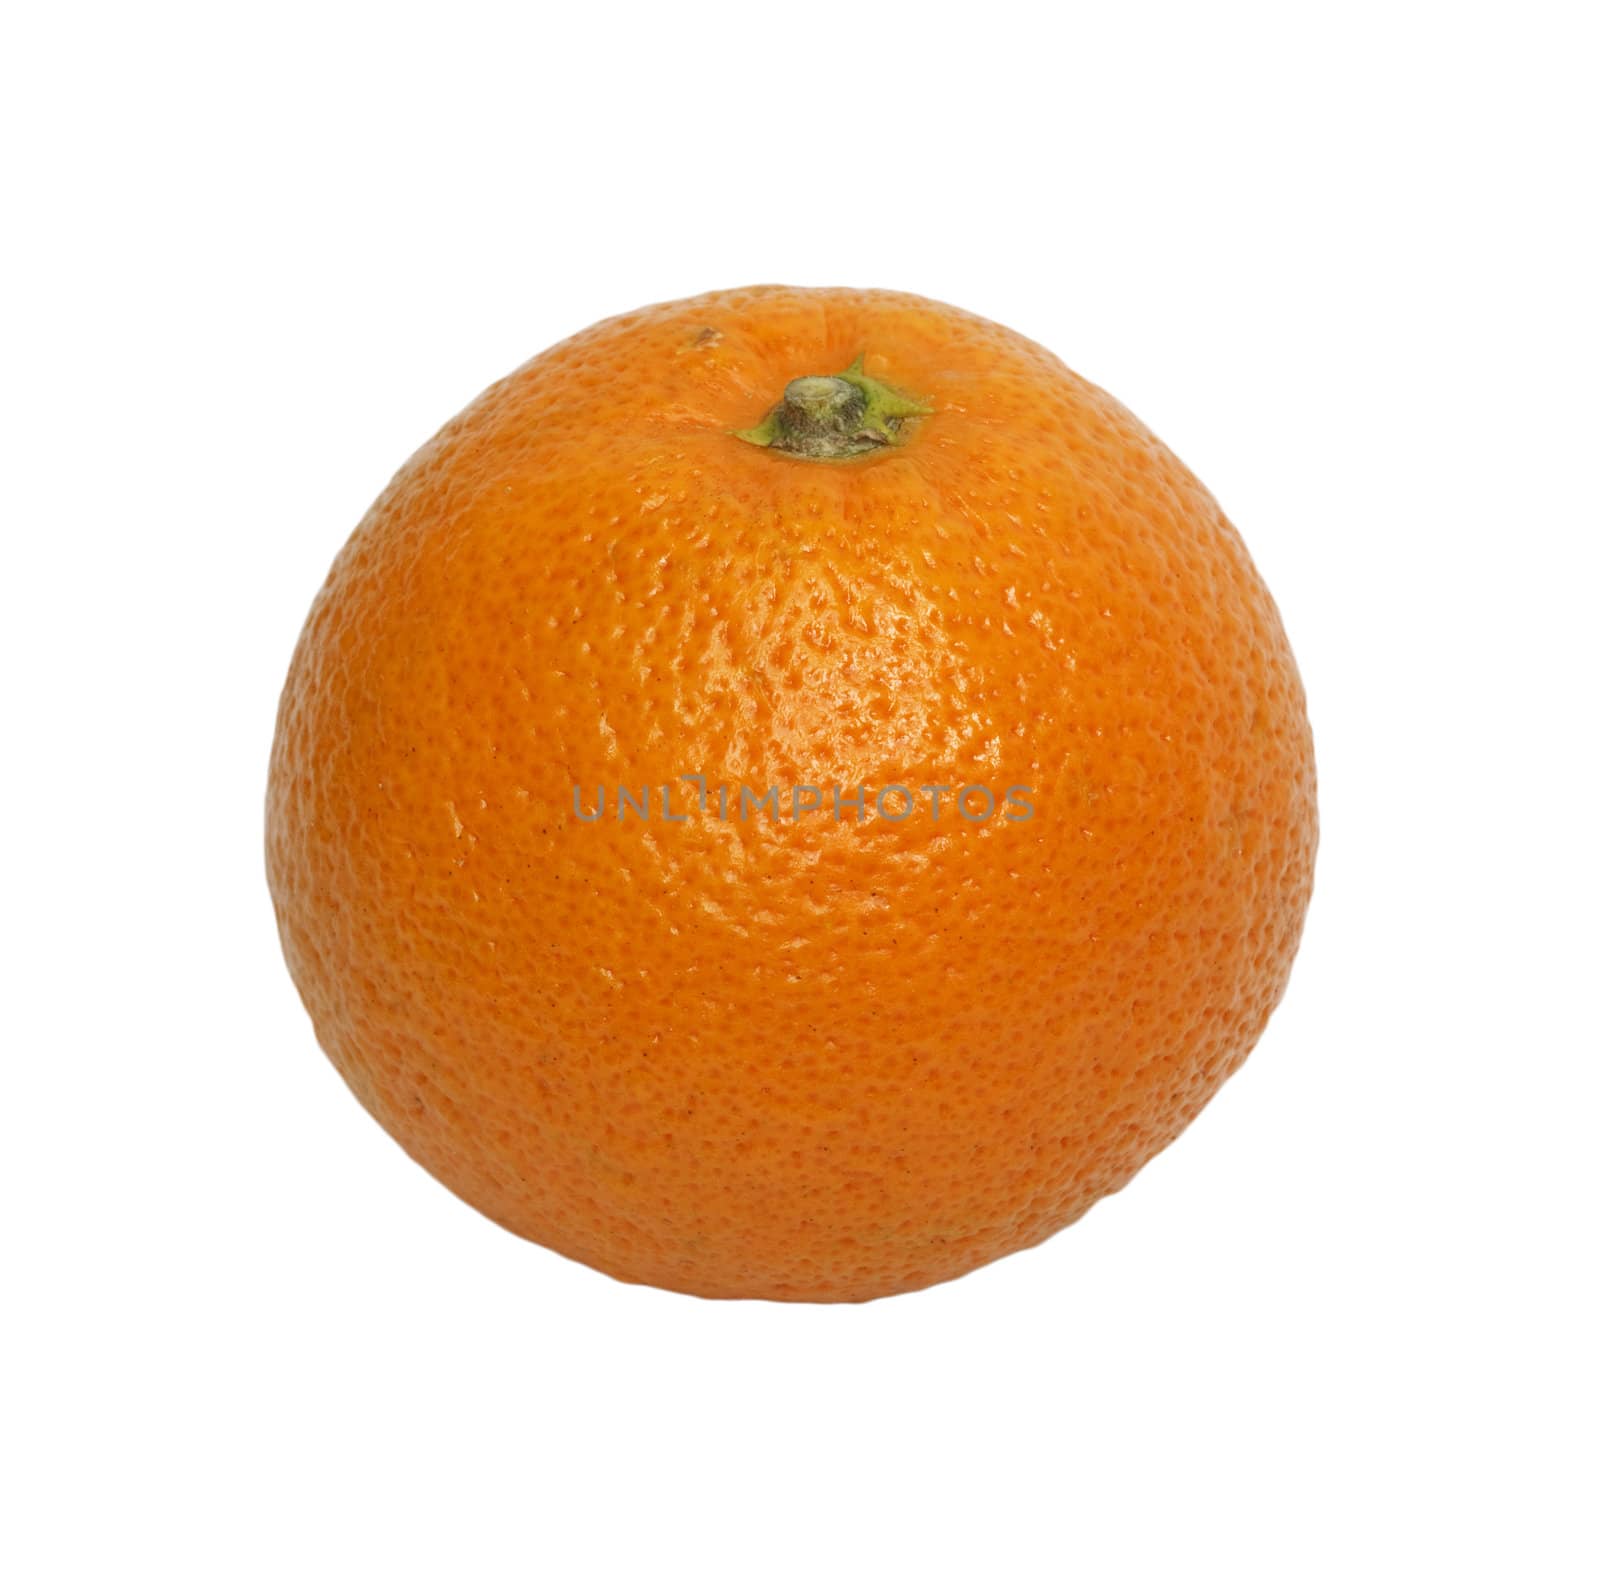 A large orange isolated on a white background